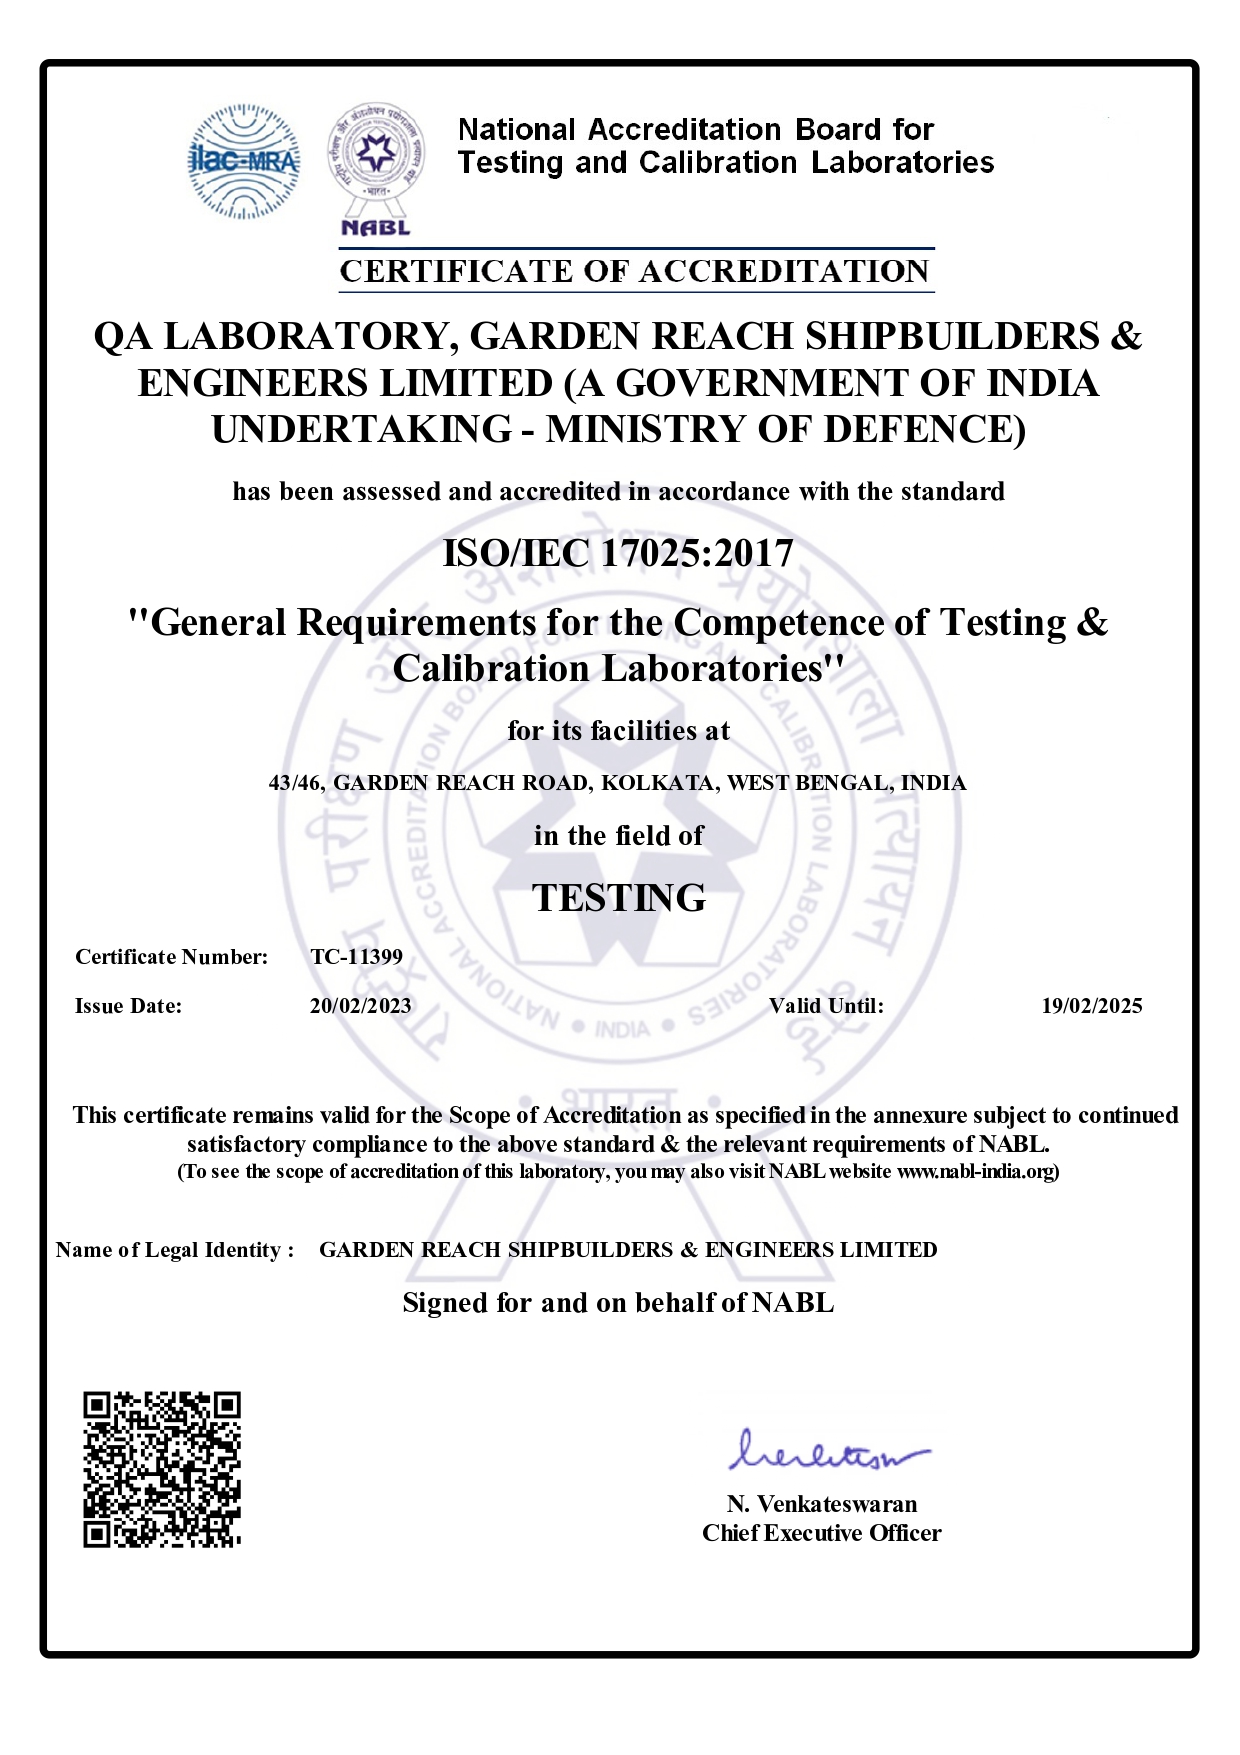 Image 2 - QA Laboratory, GRSE received NABL accreditation in Non-Destructive Testing (NDT) services W.E.F 20 Feb 23 on 17 Mar 23